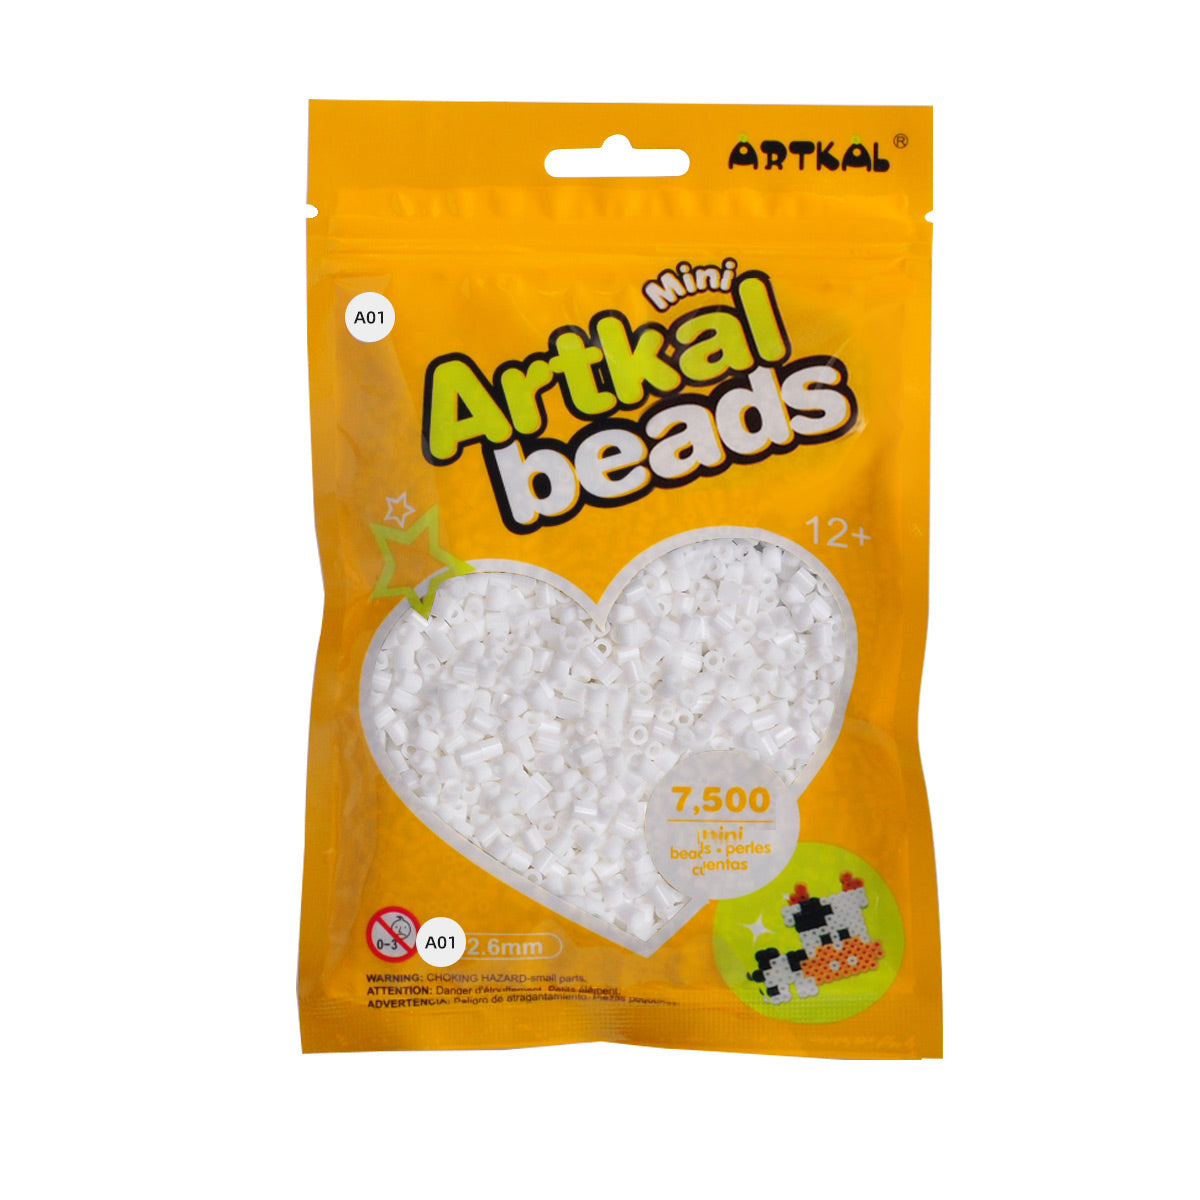 (A01-A50) A-2.6mm 7500P single pack mini artkal beads